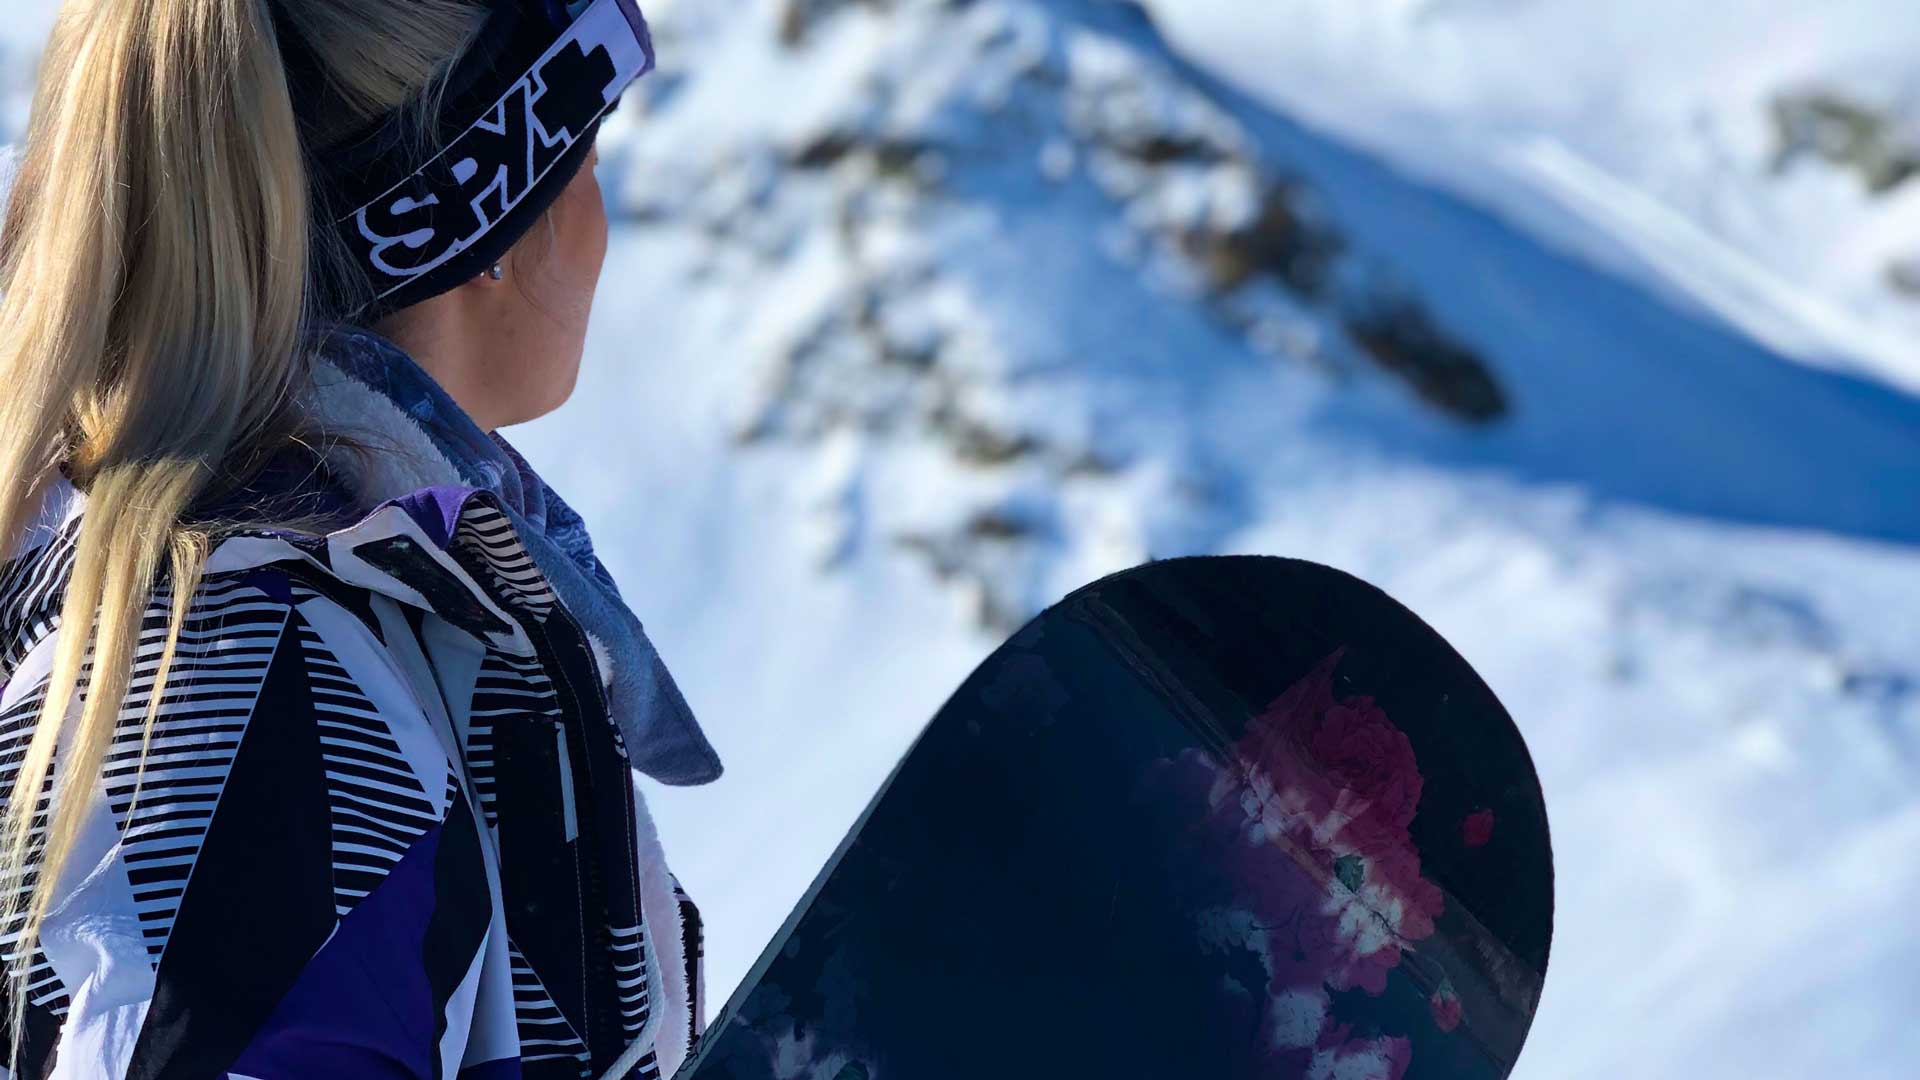 Improving-Your-Snowboarding-Skills-on-LightRoom